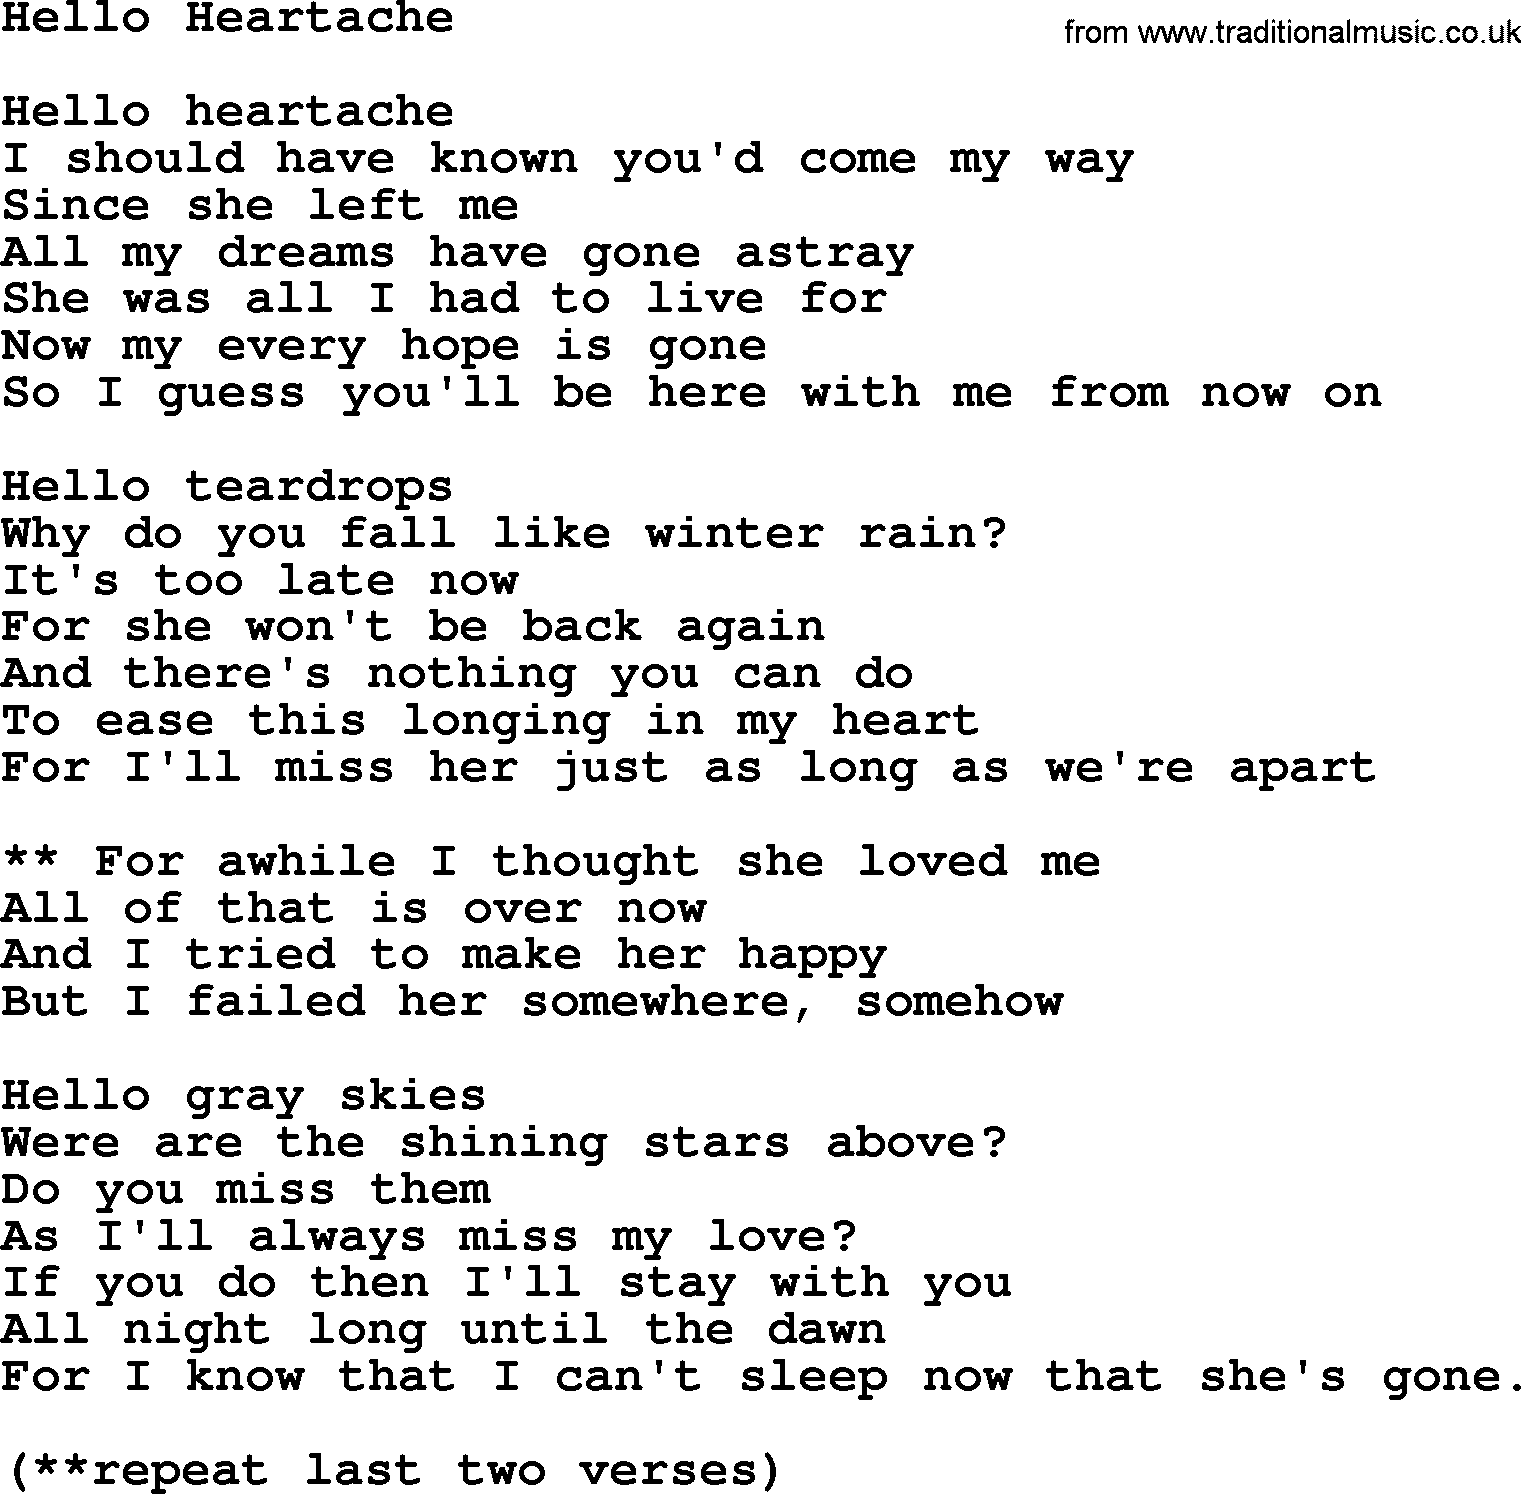 Marty Robbins song: Hello Heartache, lyrics